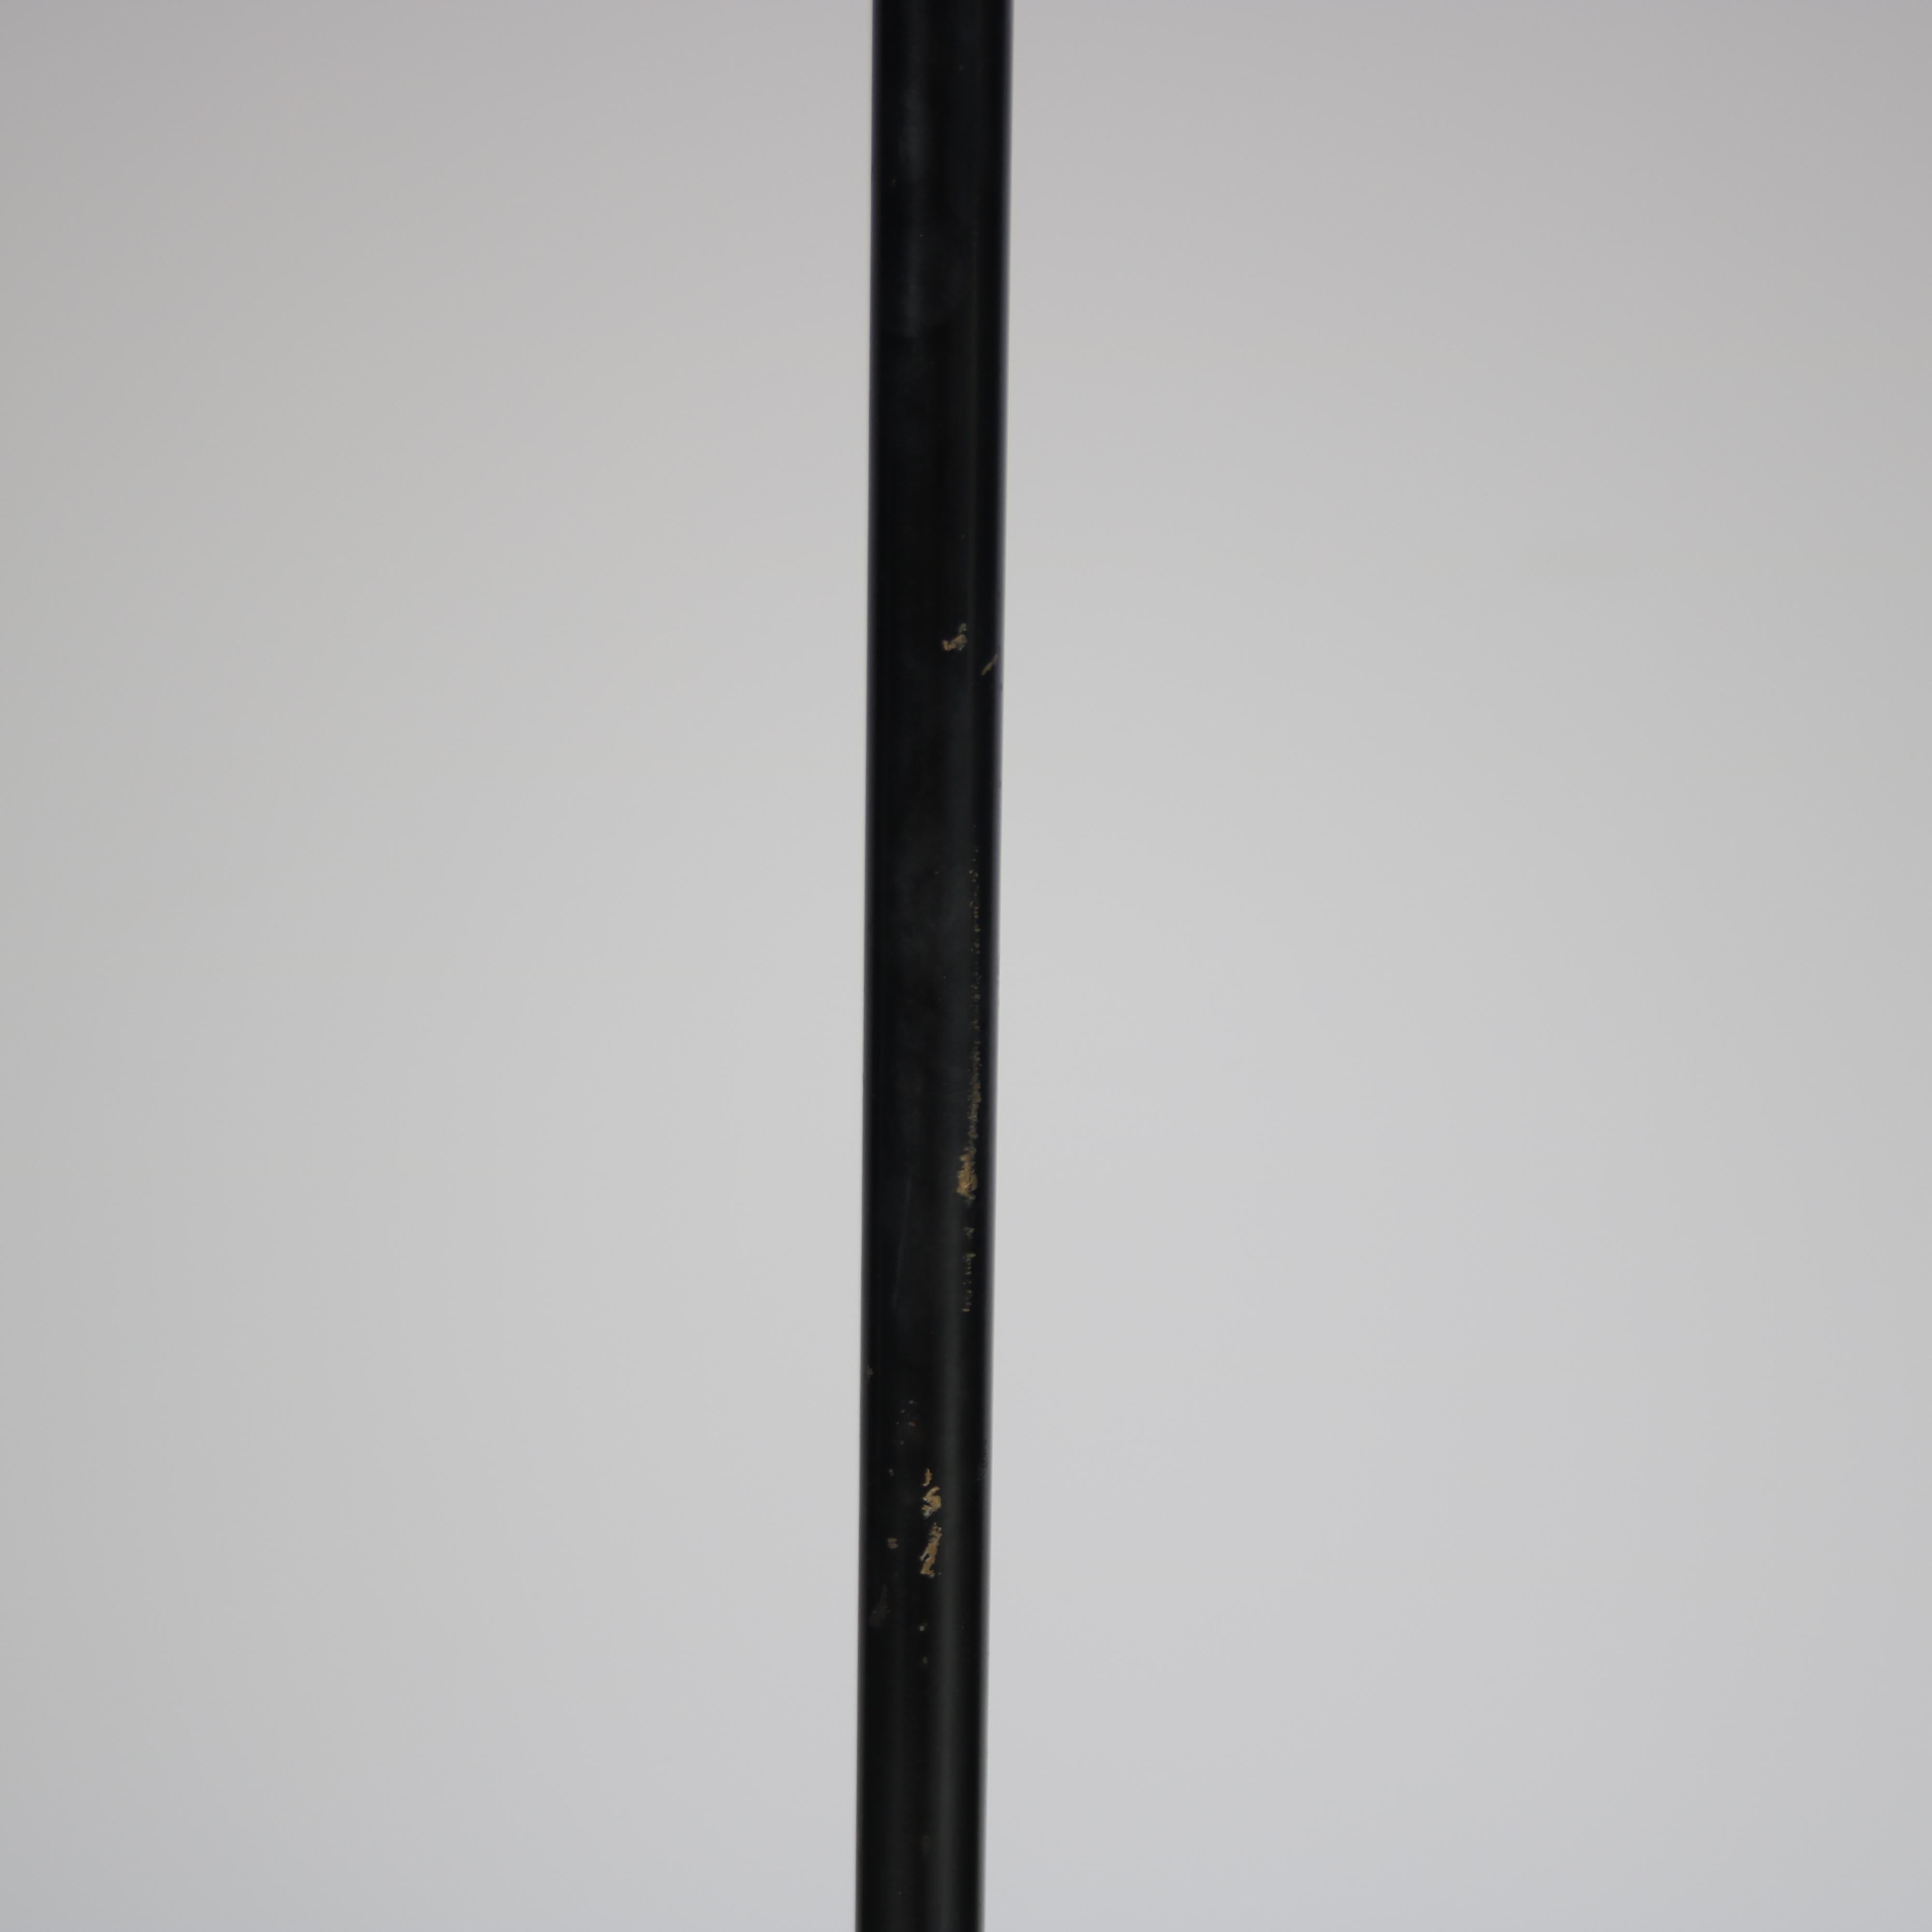 Gino Sarfatti Floor Lamp for Arteluce, Italy 1950 For Sale 4